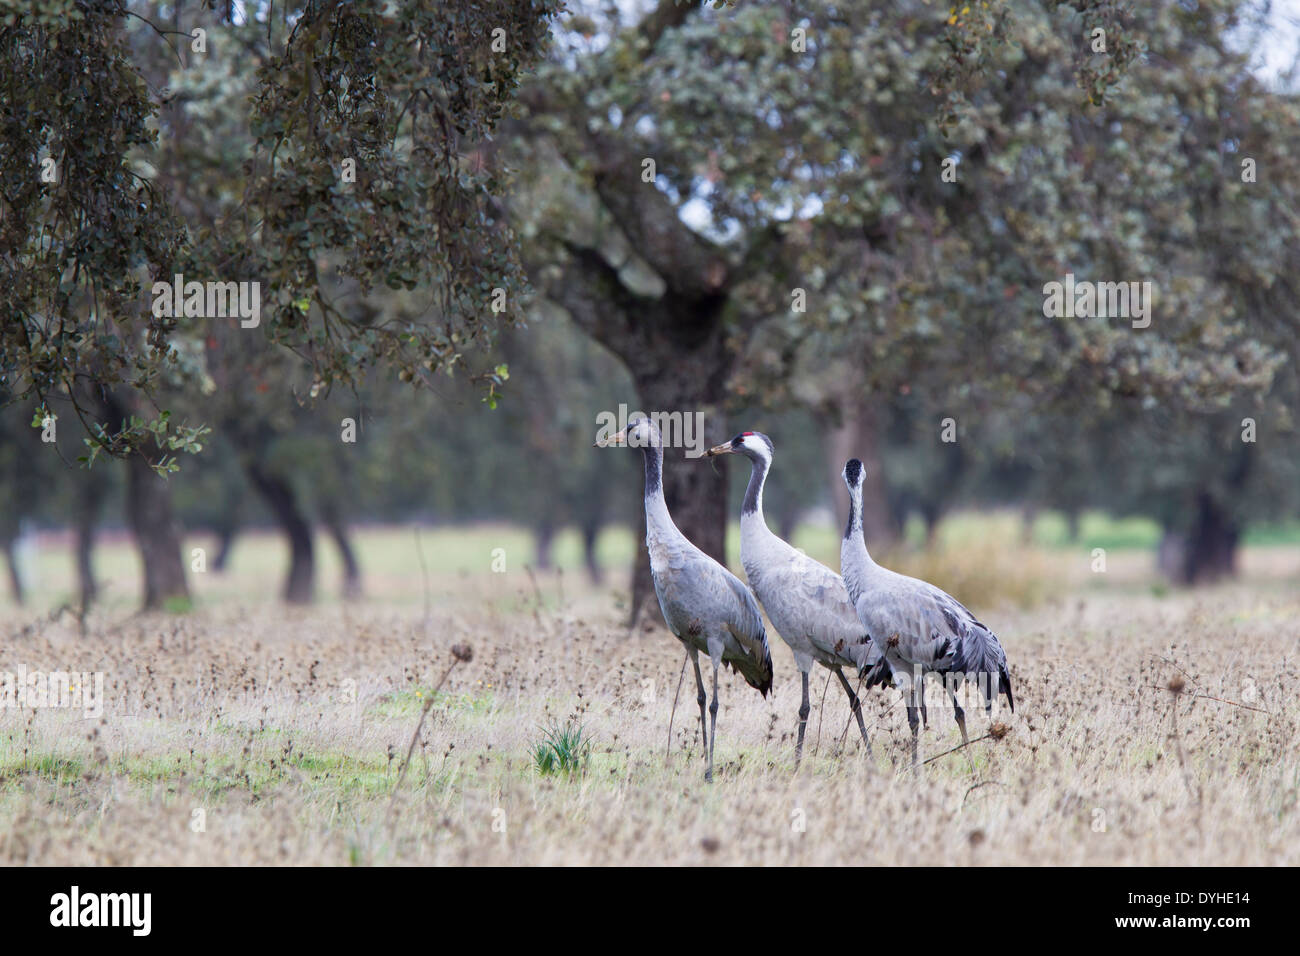 Common Crane, Eurasian Crane, Grus grus, Kranich, Extremadura, Spain, family with chick standing in dehesa with oak trees Stock Photo